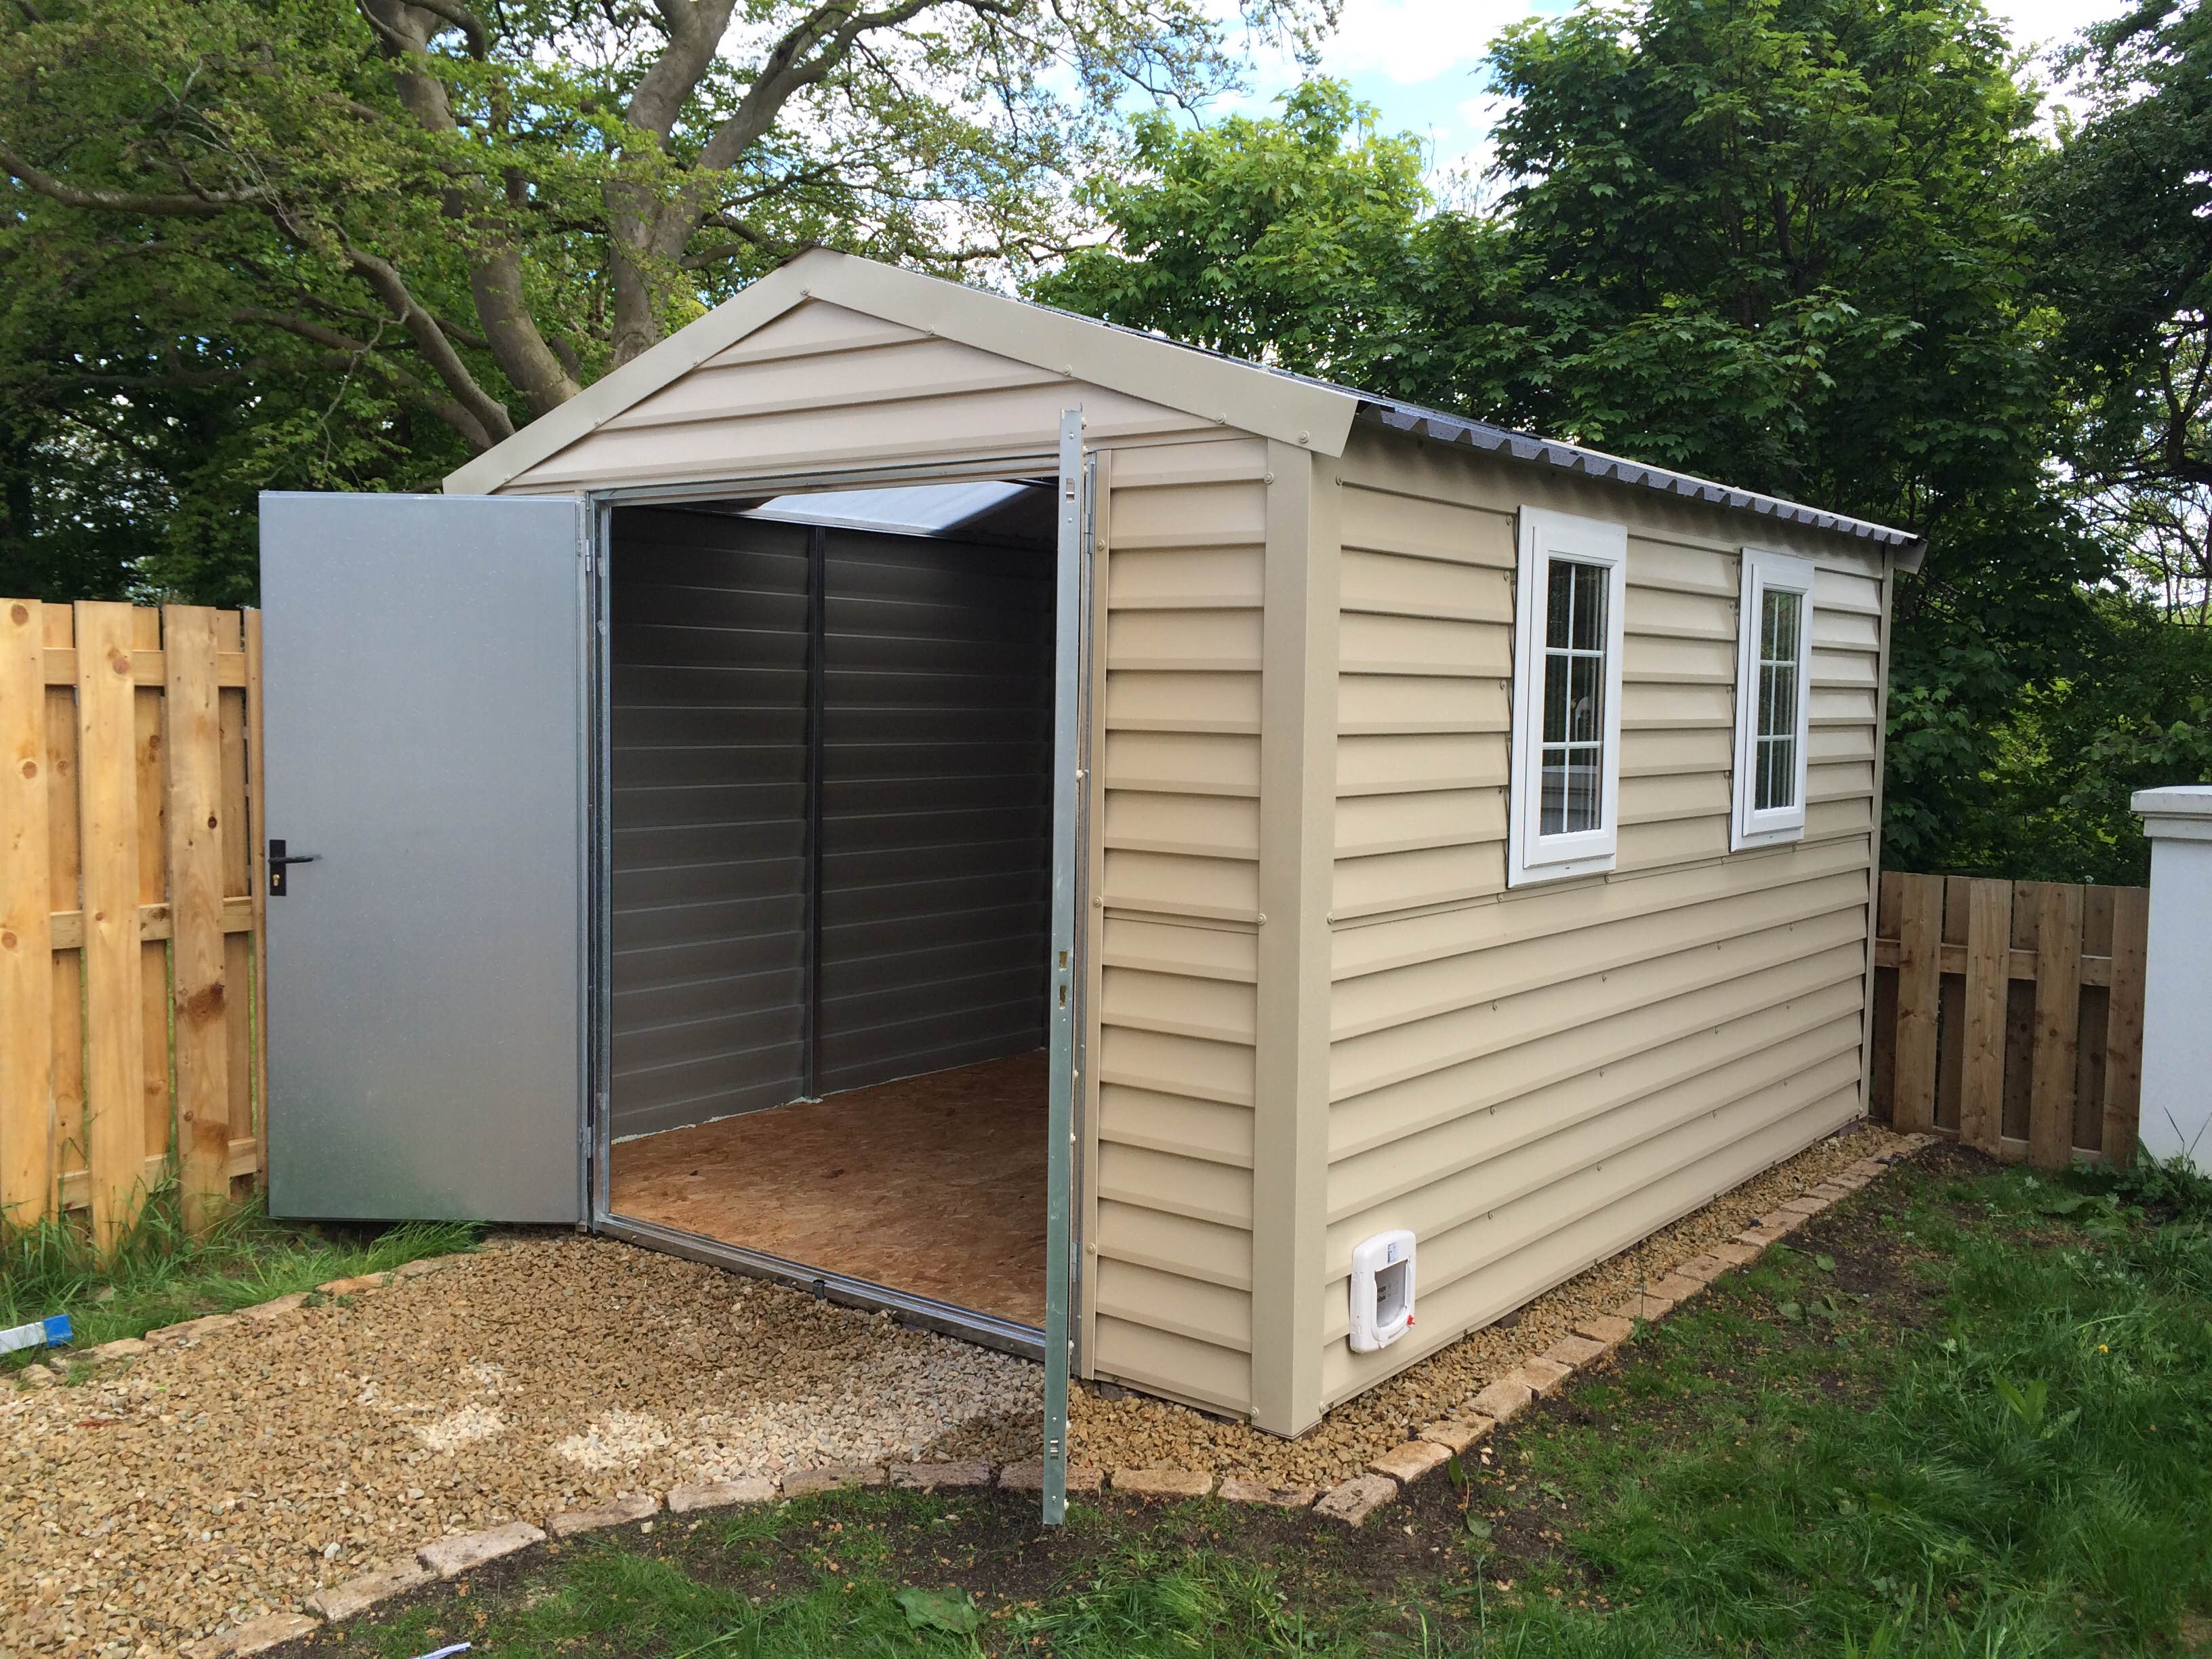 Making wood shed doors pdf ~ Building a shed diy